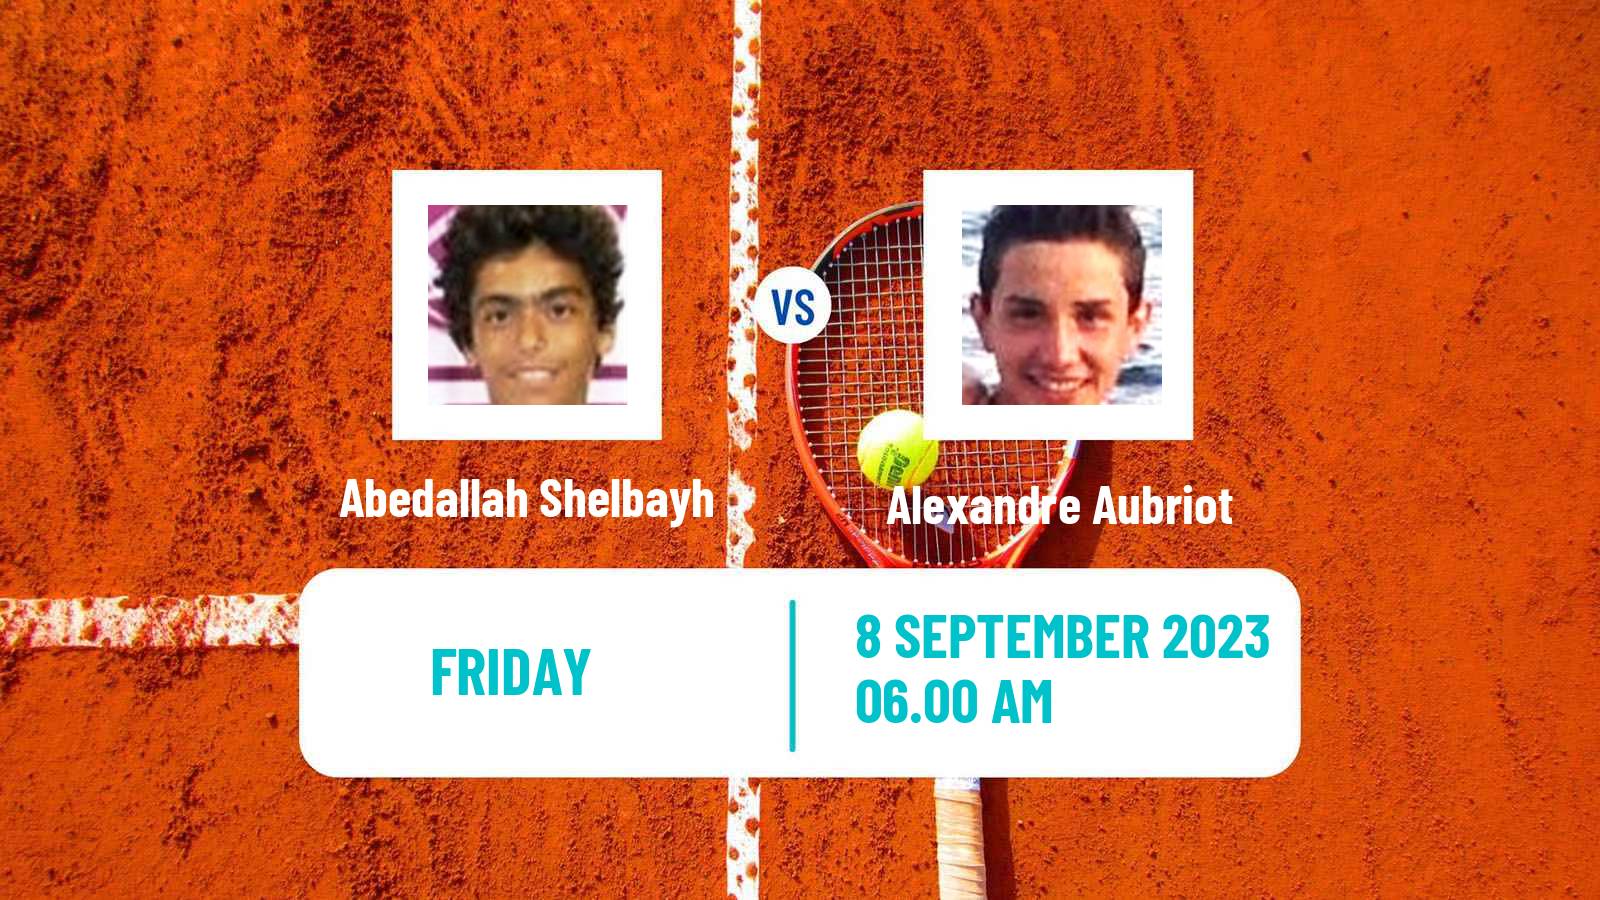 Tennis ITF M25 Monastir 5 Men Abedallah Shelbayh - Alexandre Aubriot